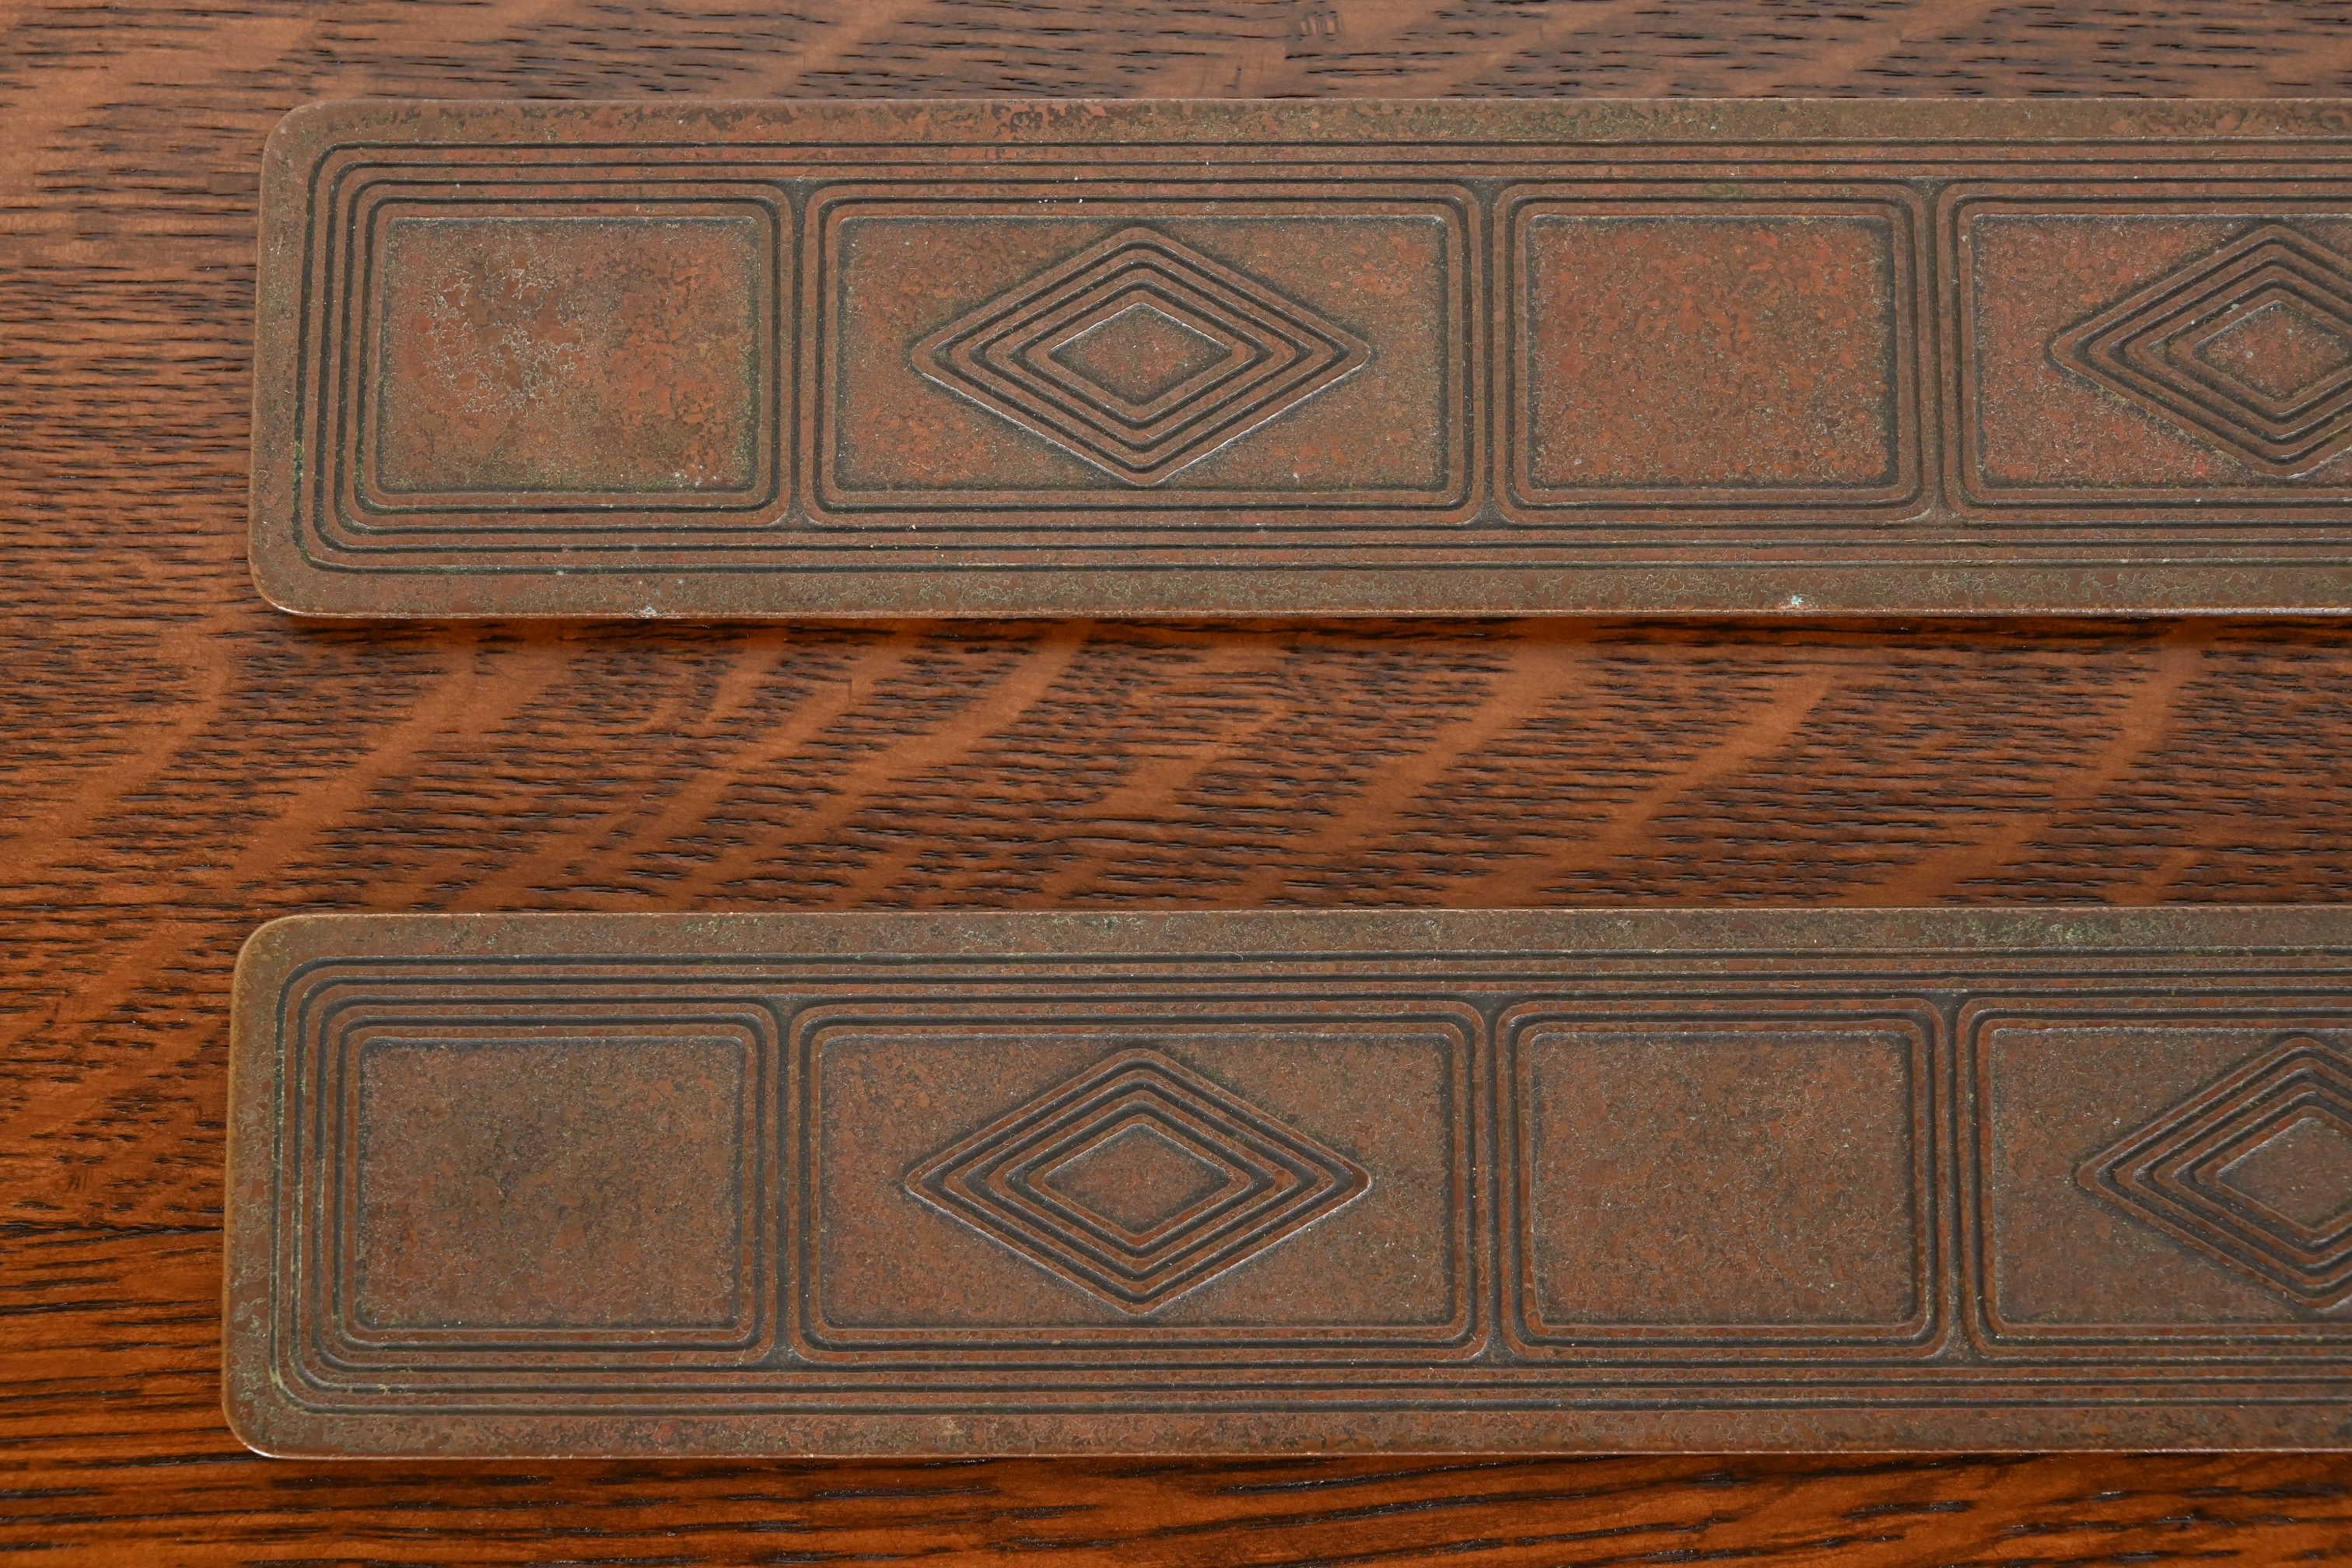 Tiffany Studios Graduate Pattern Bronze Blotter Ends With Leather Desk Blotter For Sale 2